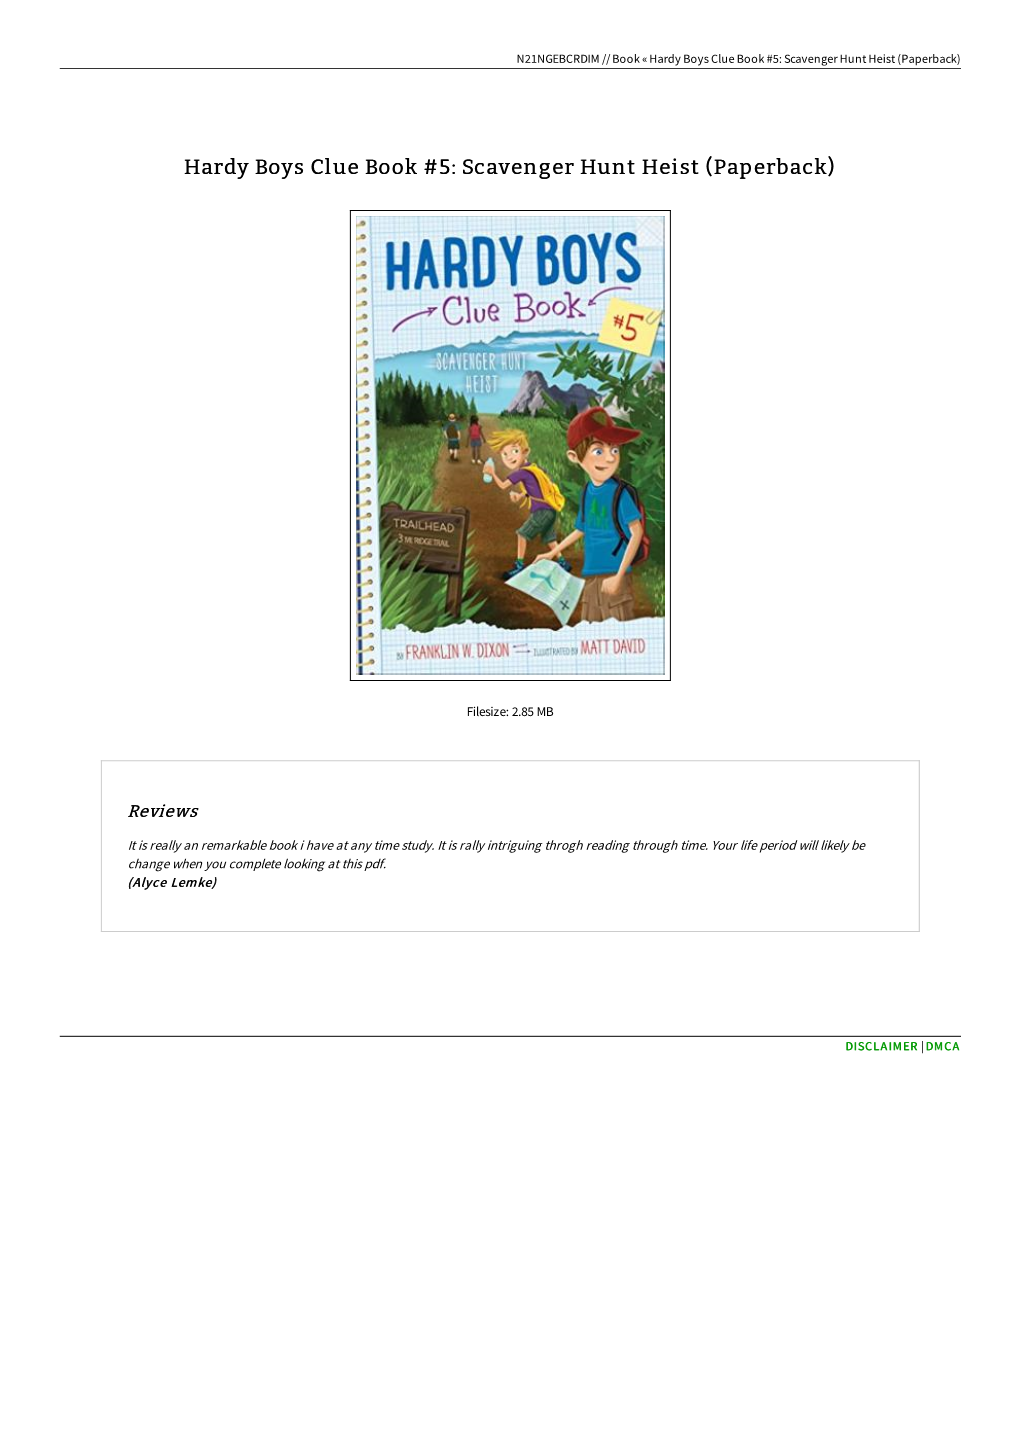 Hardy Boys Clue Book #5: Scavenger Hunt Heist (Paperback)